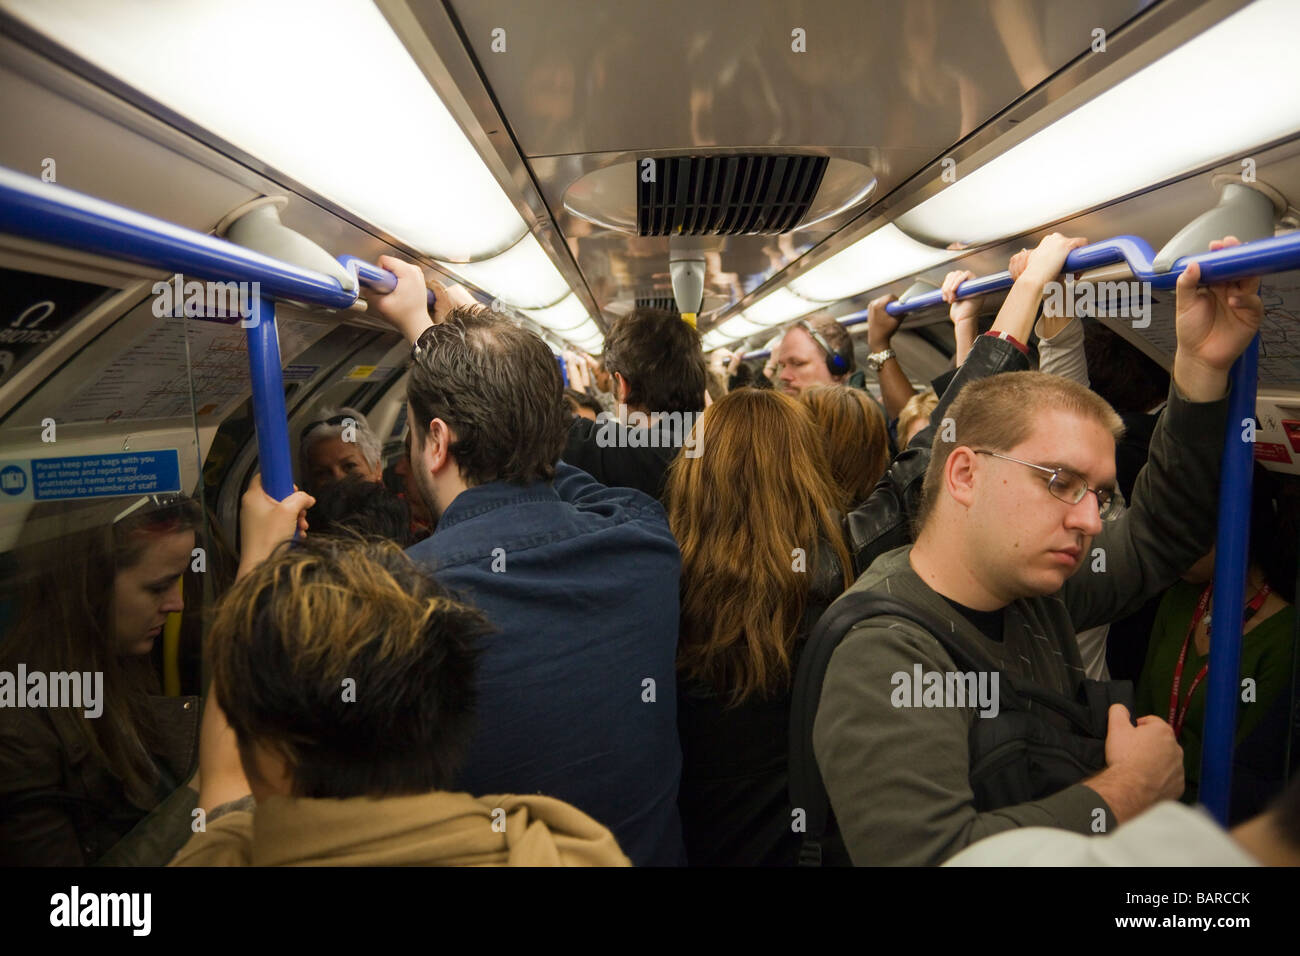 crowded tube carriage, London Underground, London, England Stock Photo